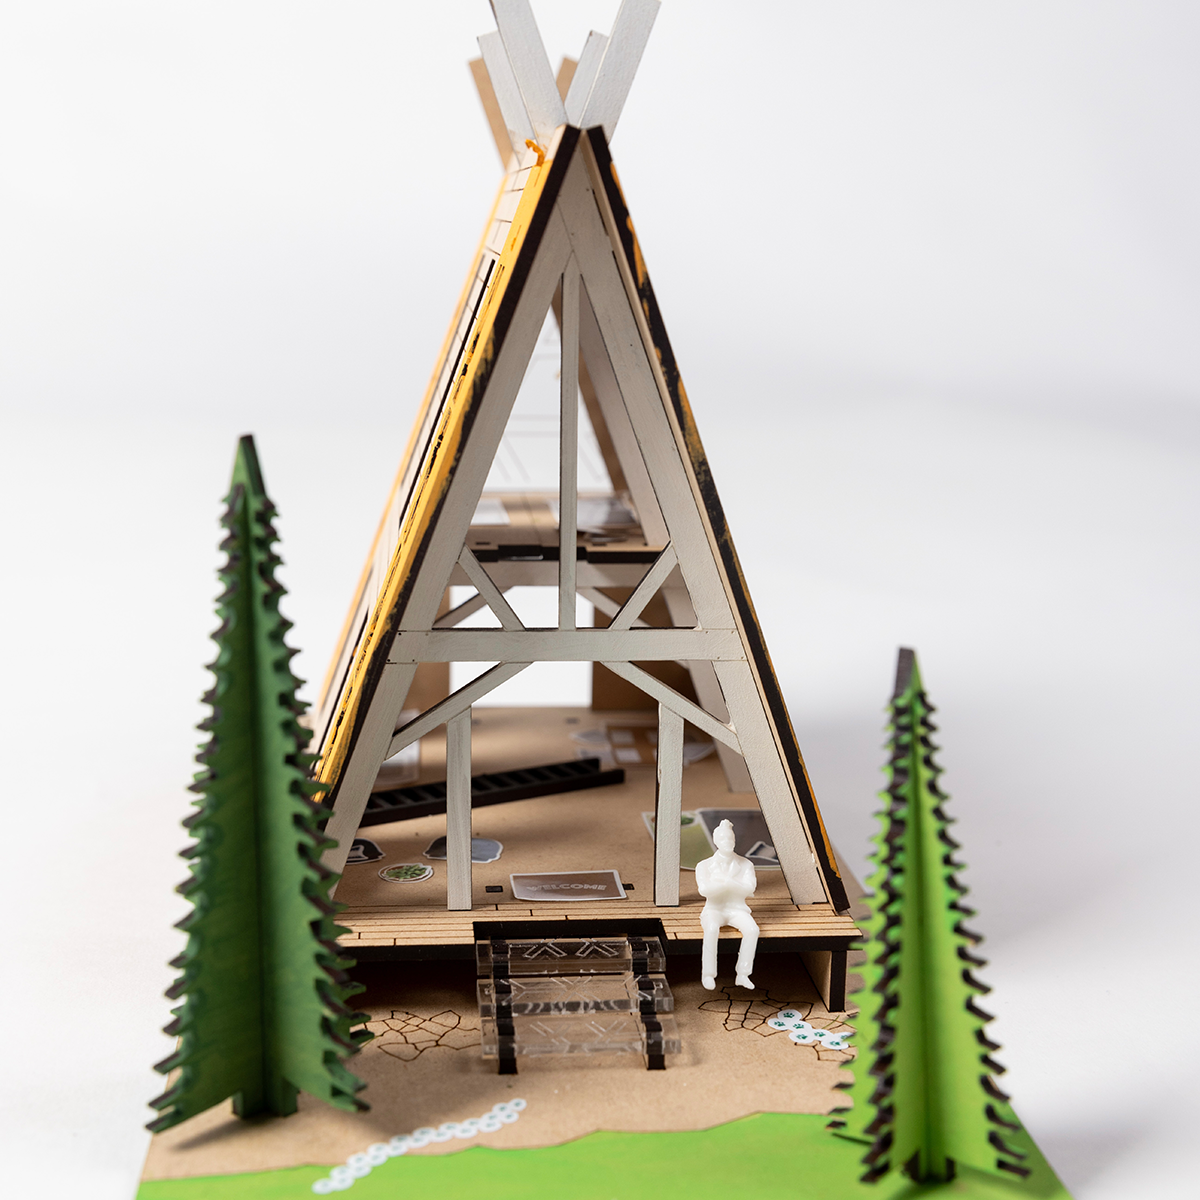 Evergreen Cabin Architectural Model Building Kit